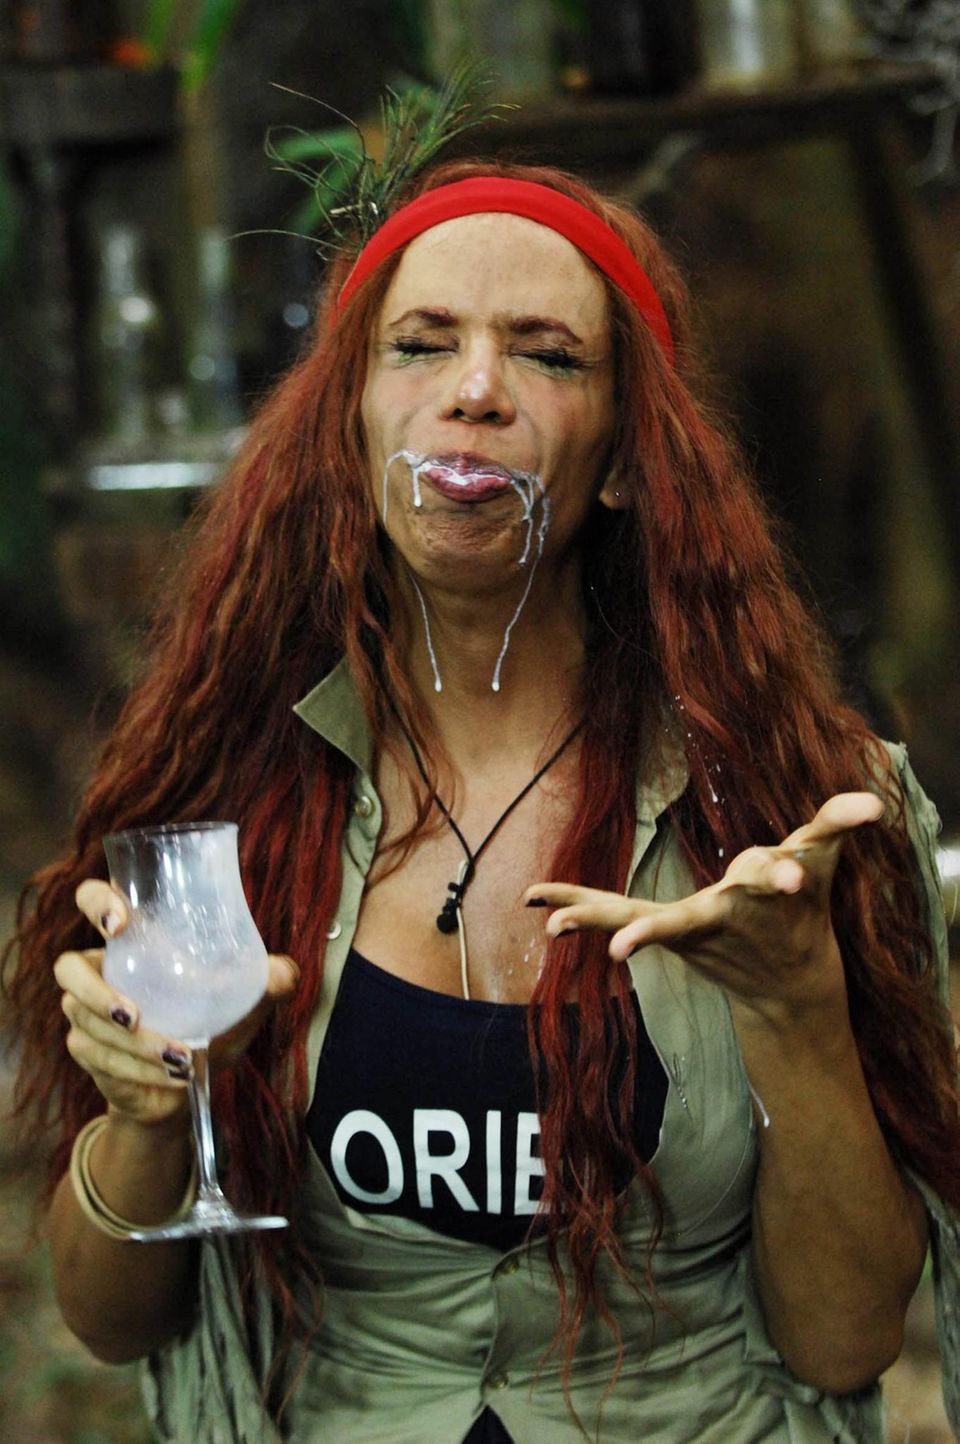 Dschungelcamp: Lorielle London trinkt